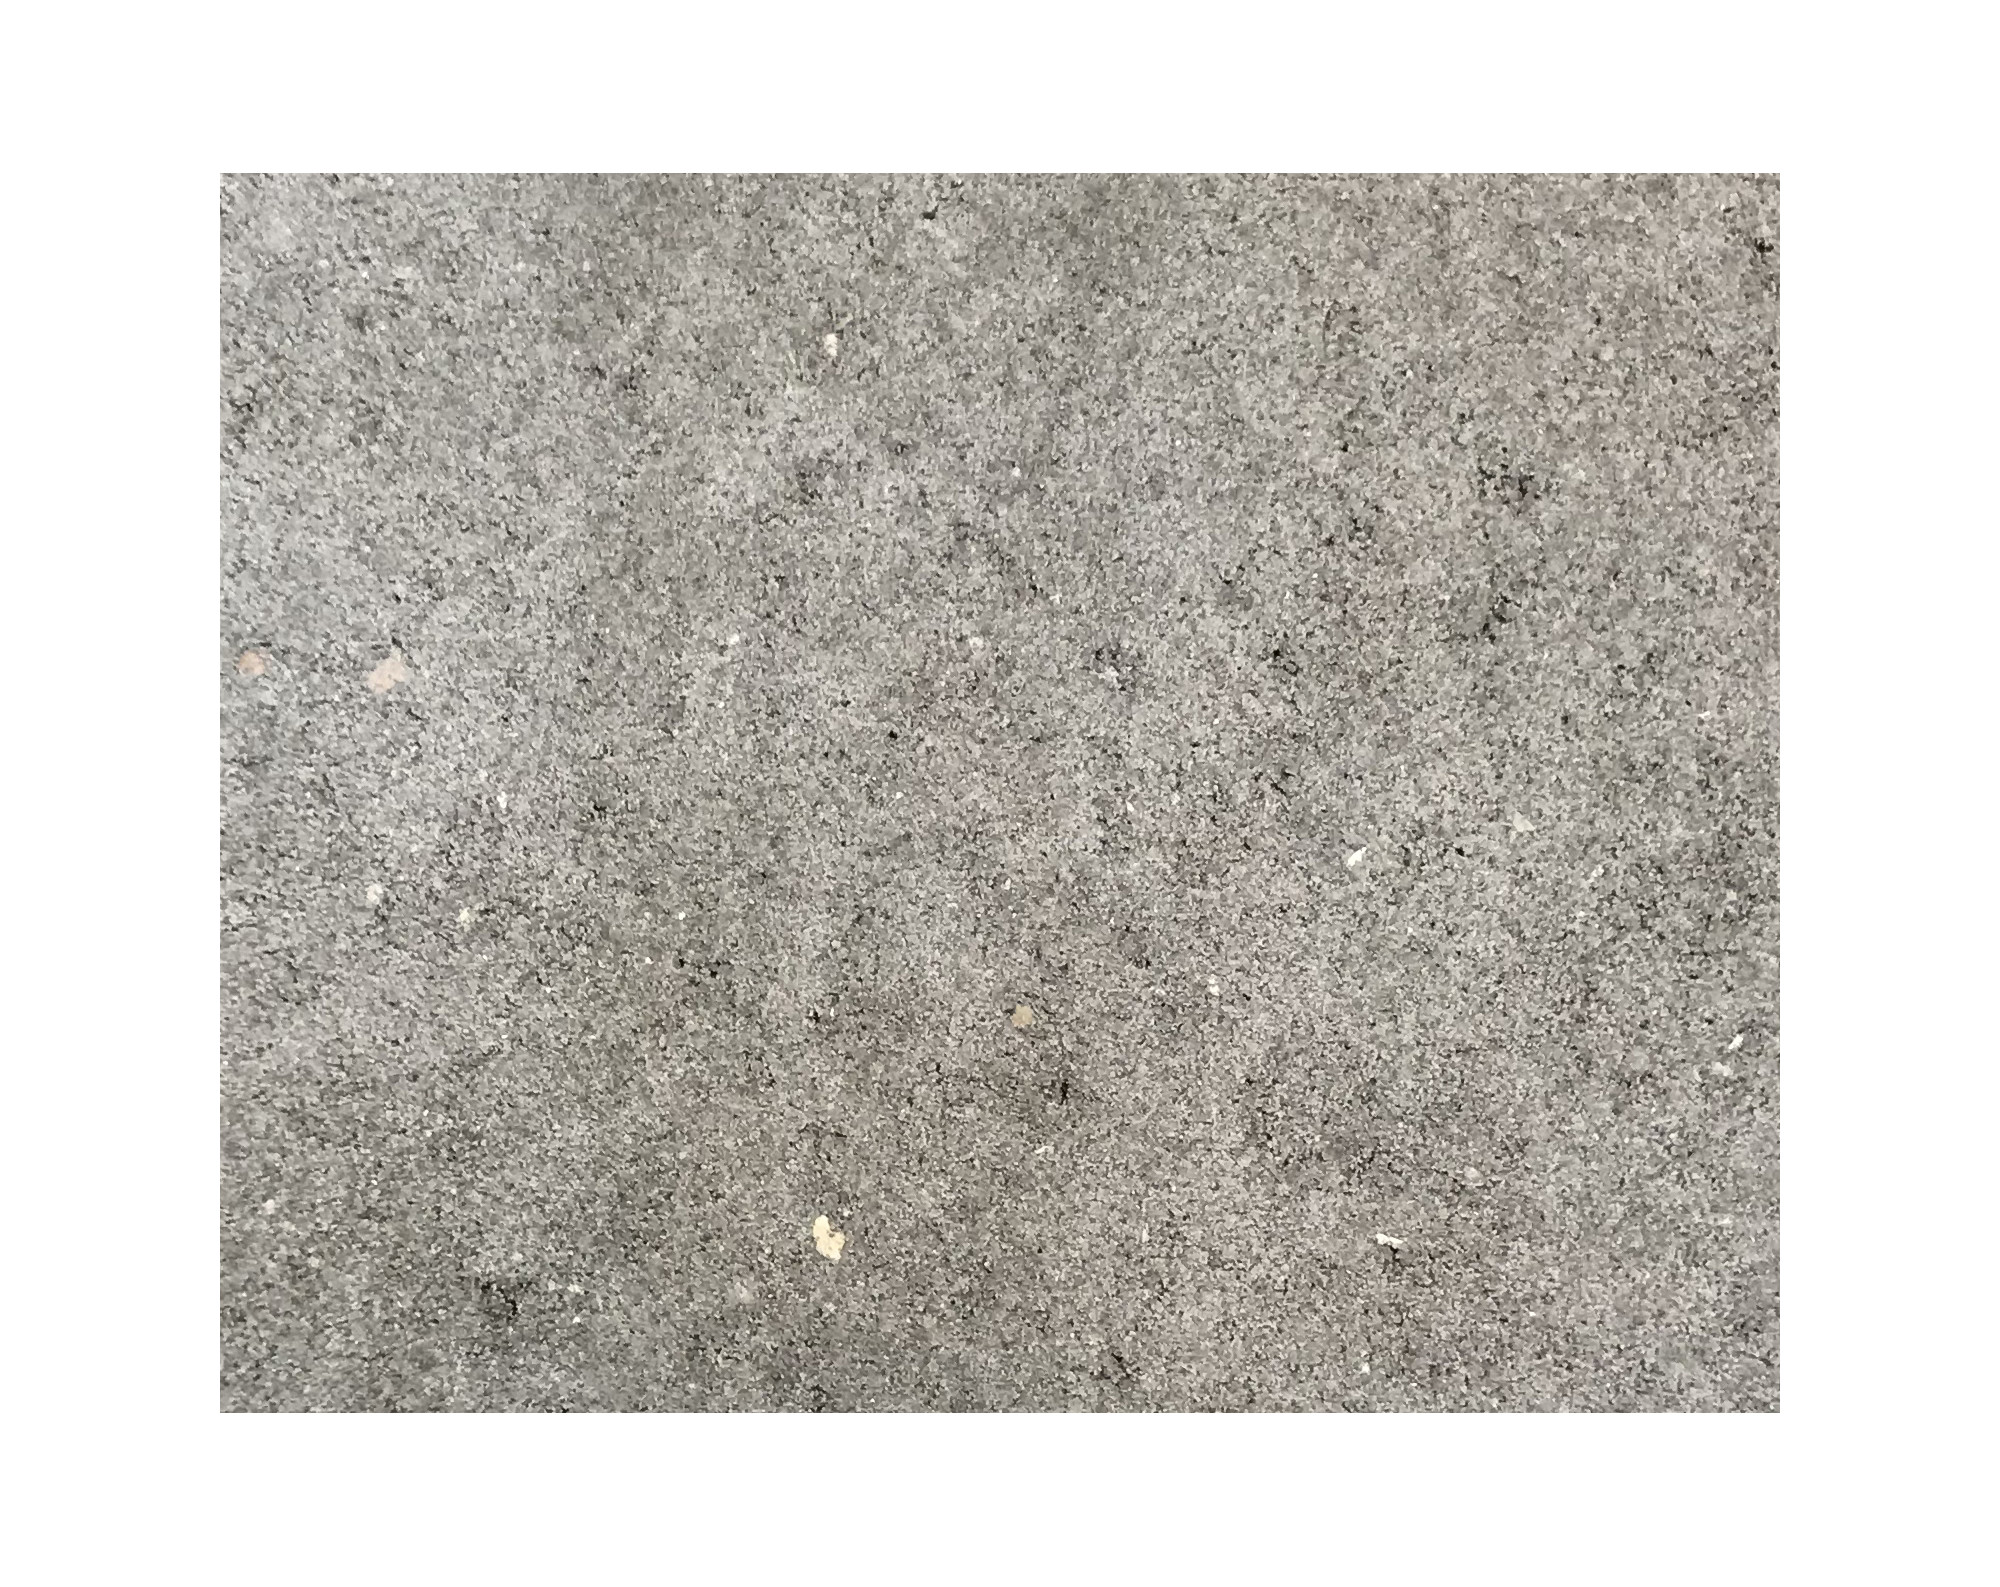 Harmo roc nevadaset, rustica-serie, rond d: 3,00 m, grijs , beton